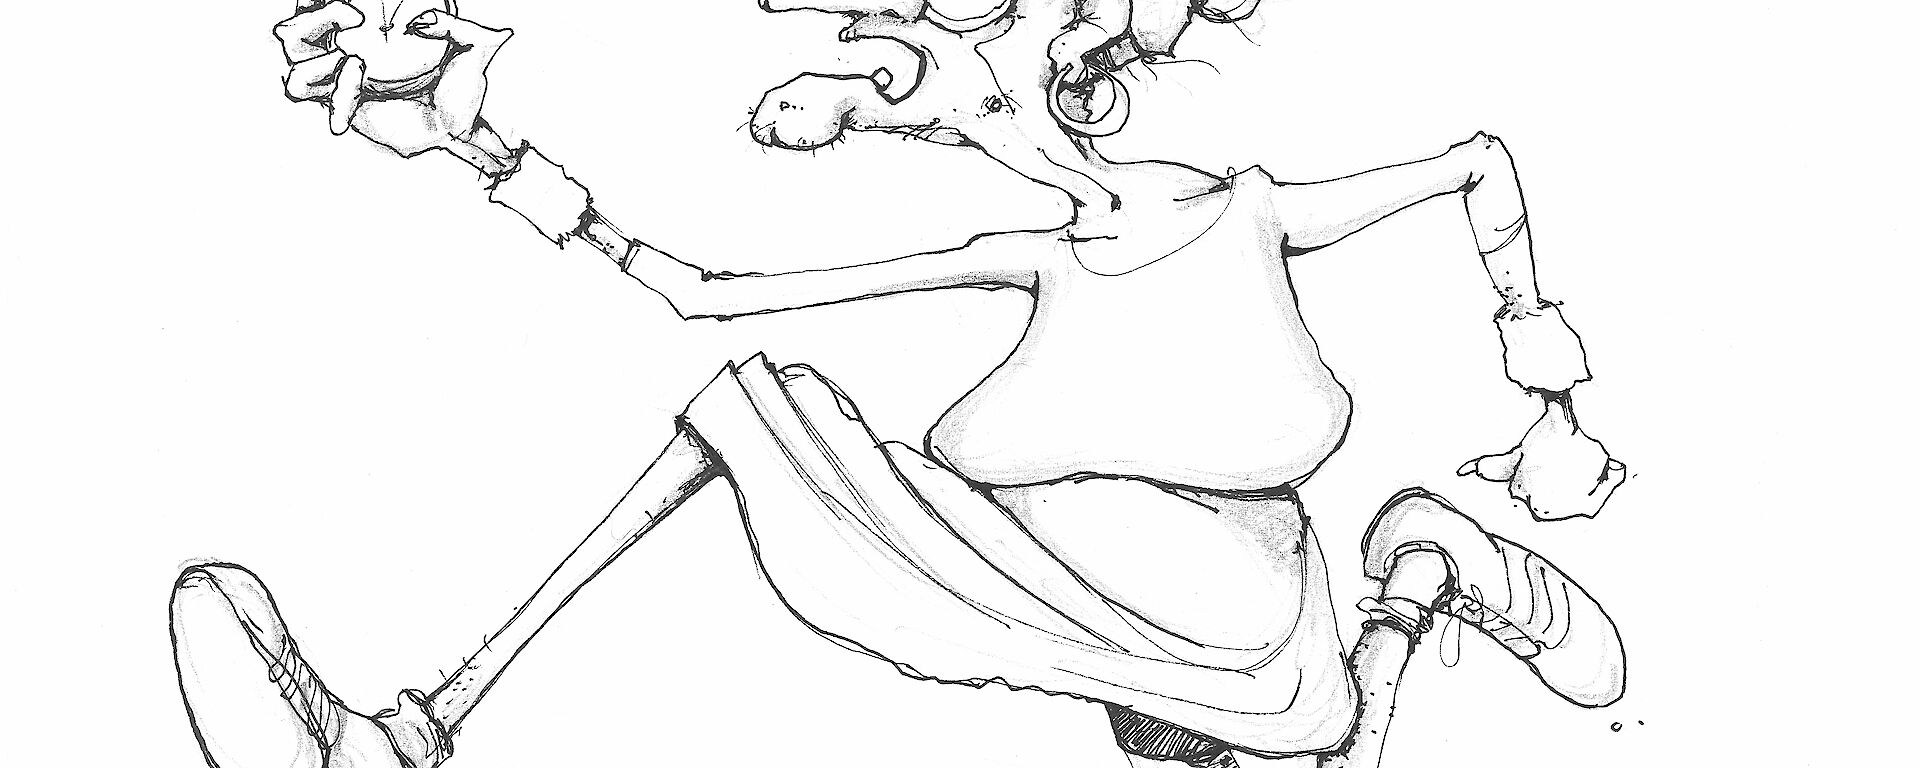 Cartoon illustration of elderly lady sprinting